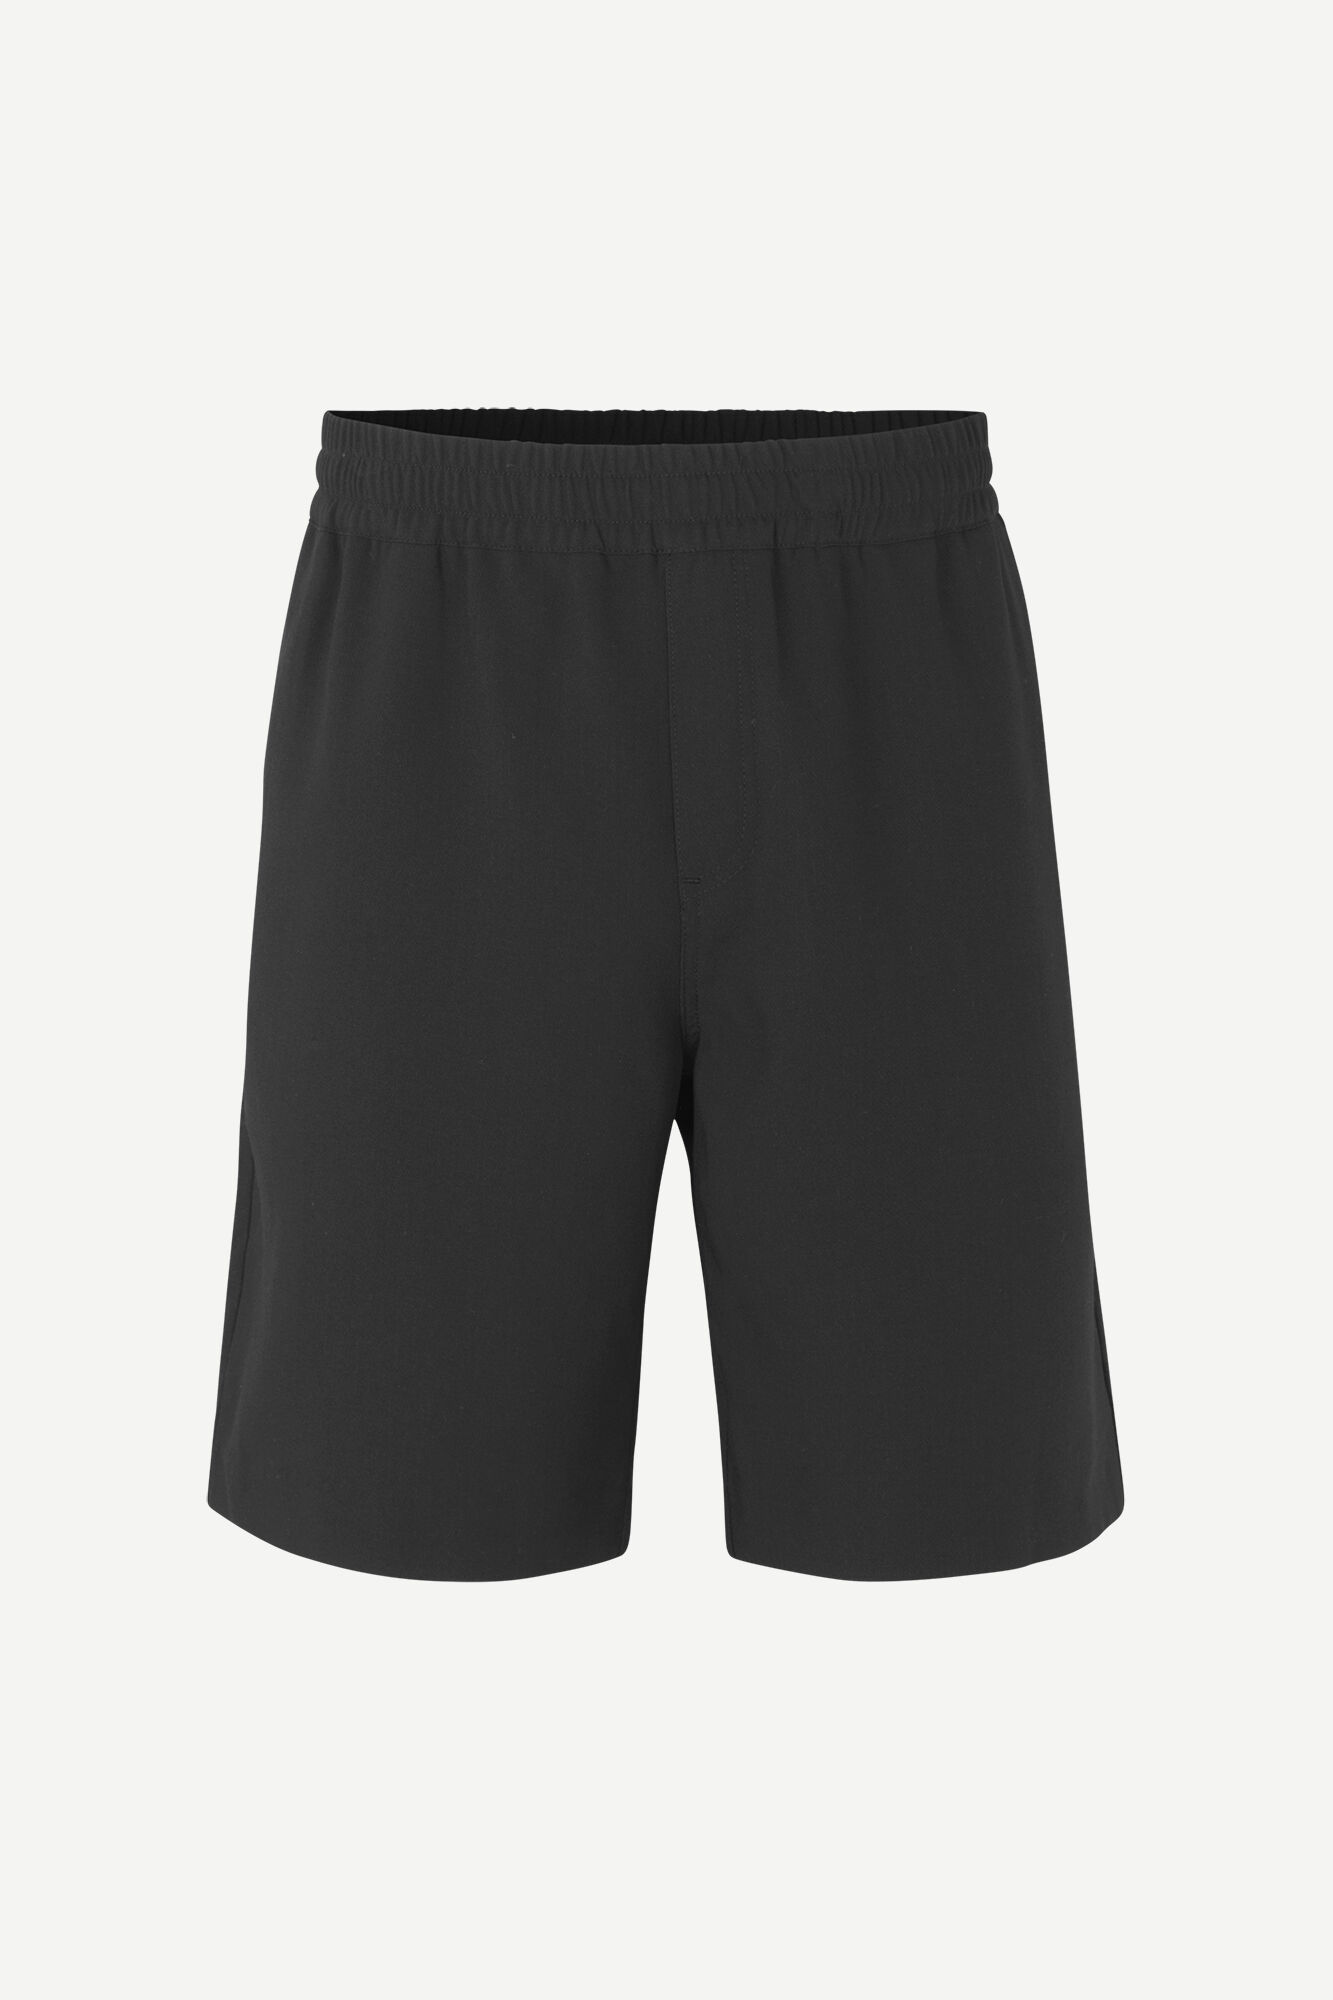 Samsøe & Samsøe Smith shorts, black, medium